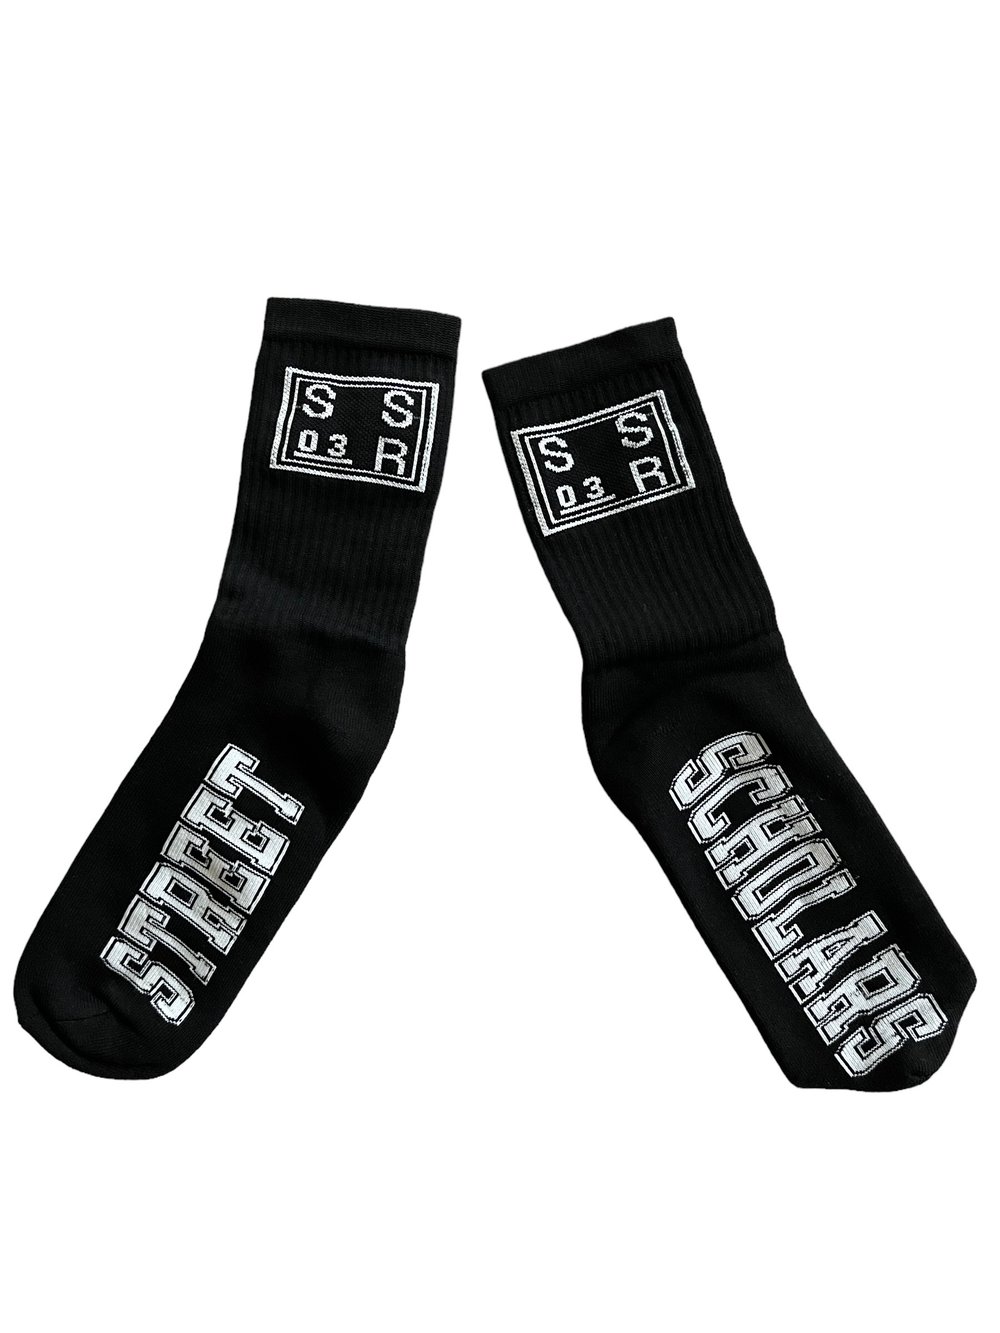 SSR03 - “Traditional” Black Crew Socks 